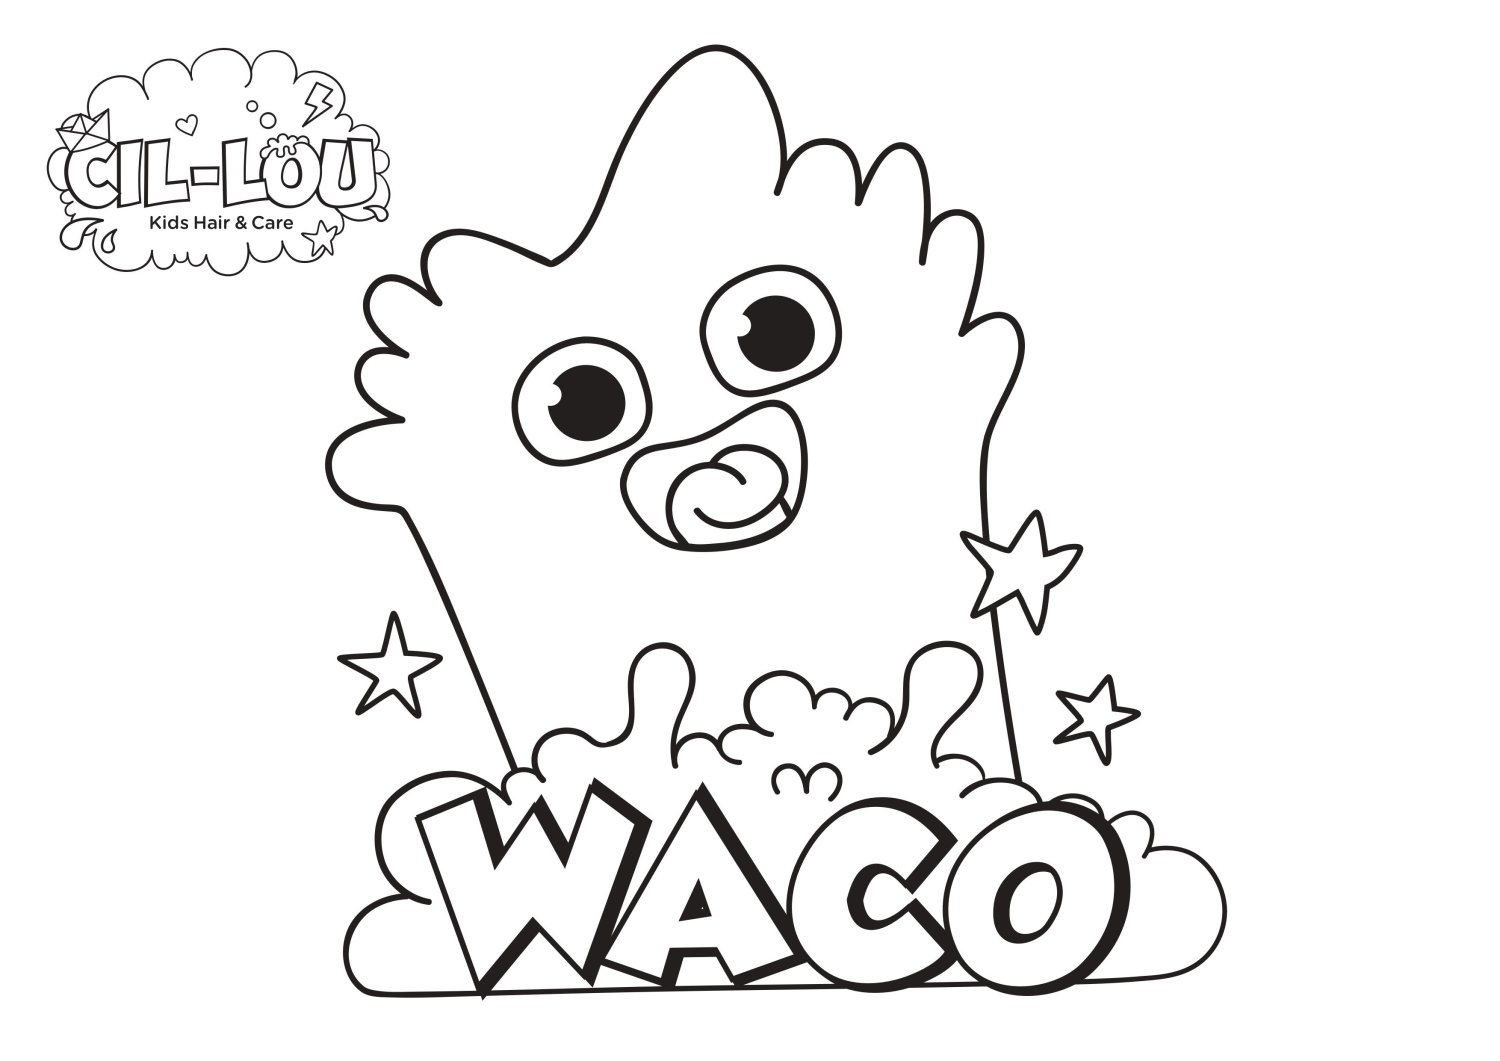 CIL-LOU kleurplaat WACO